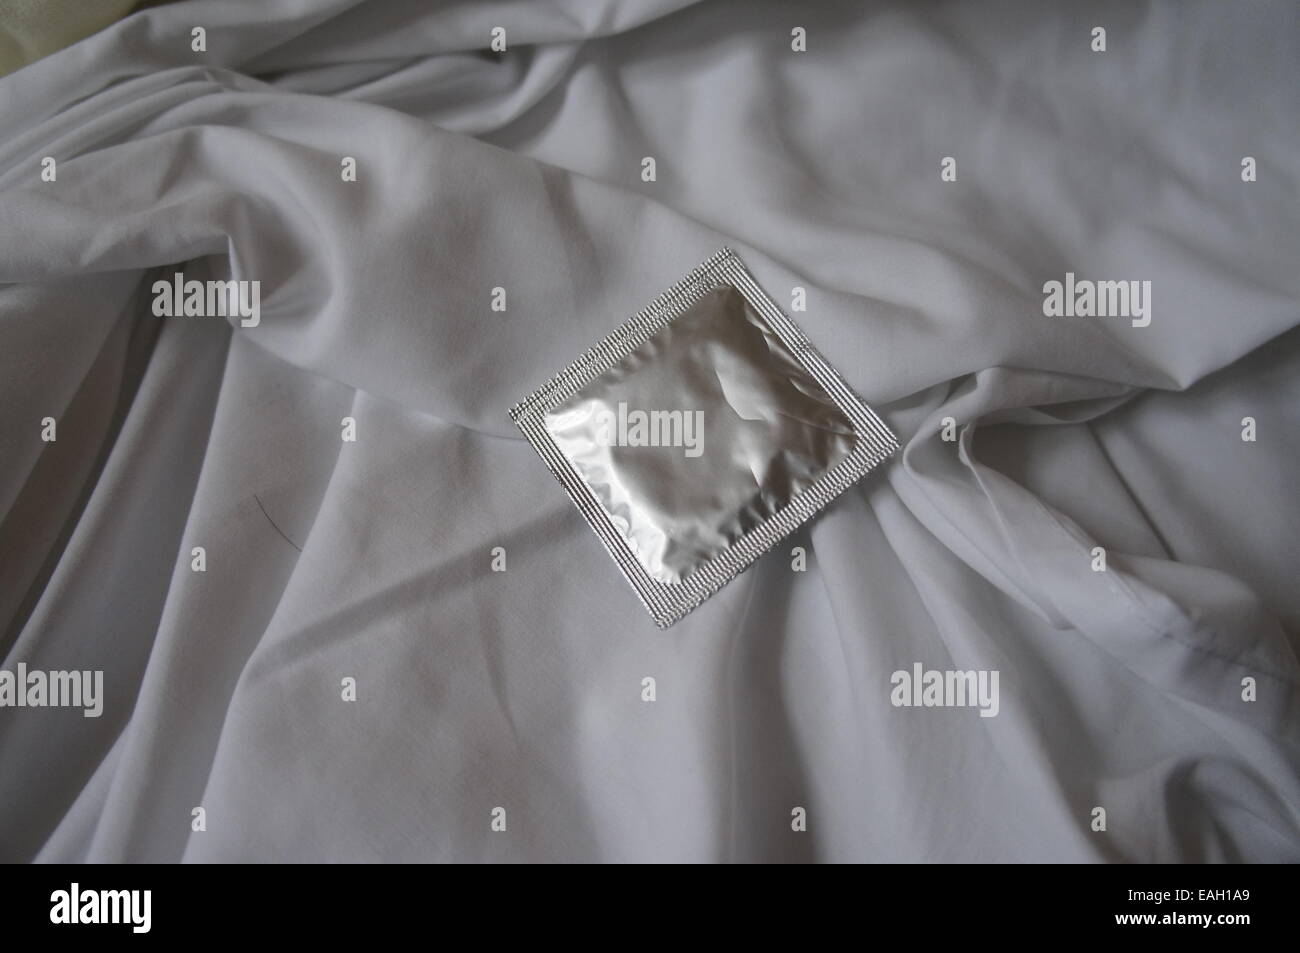 condom on bedsheets Stock Photo